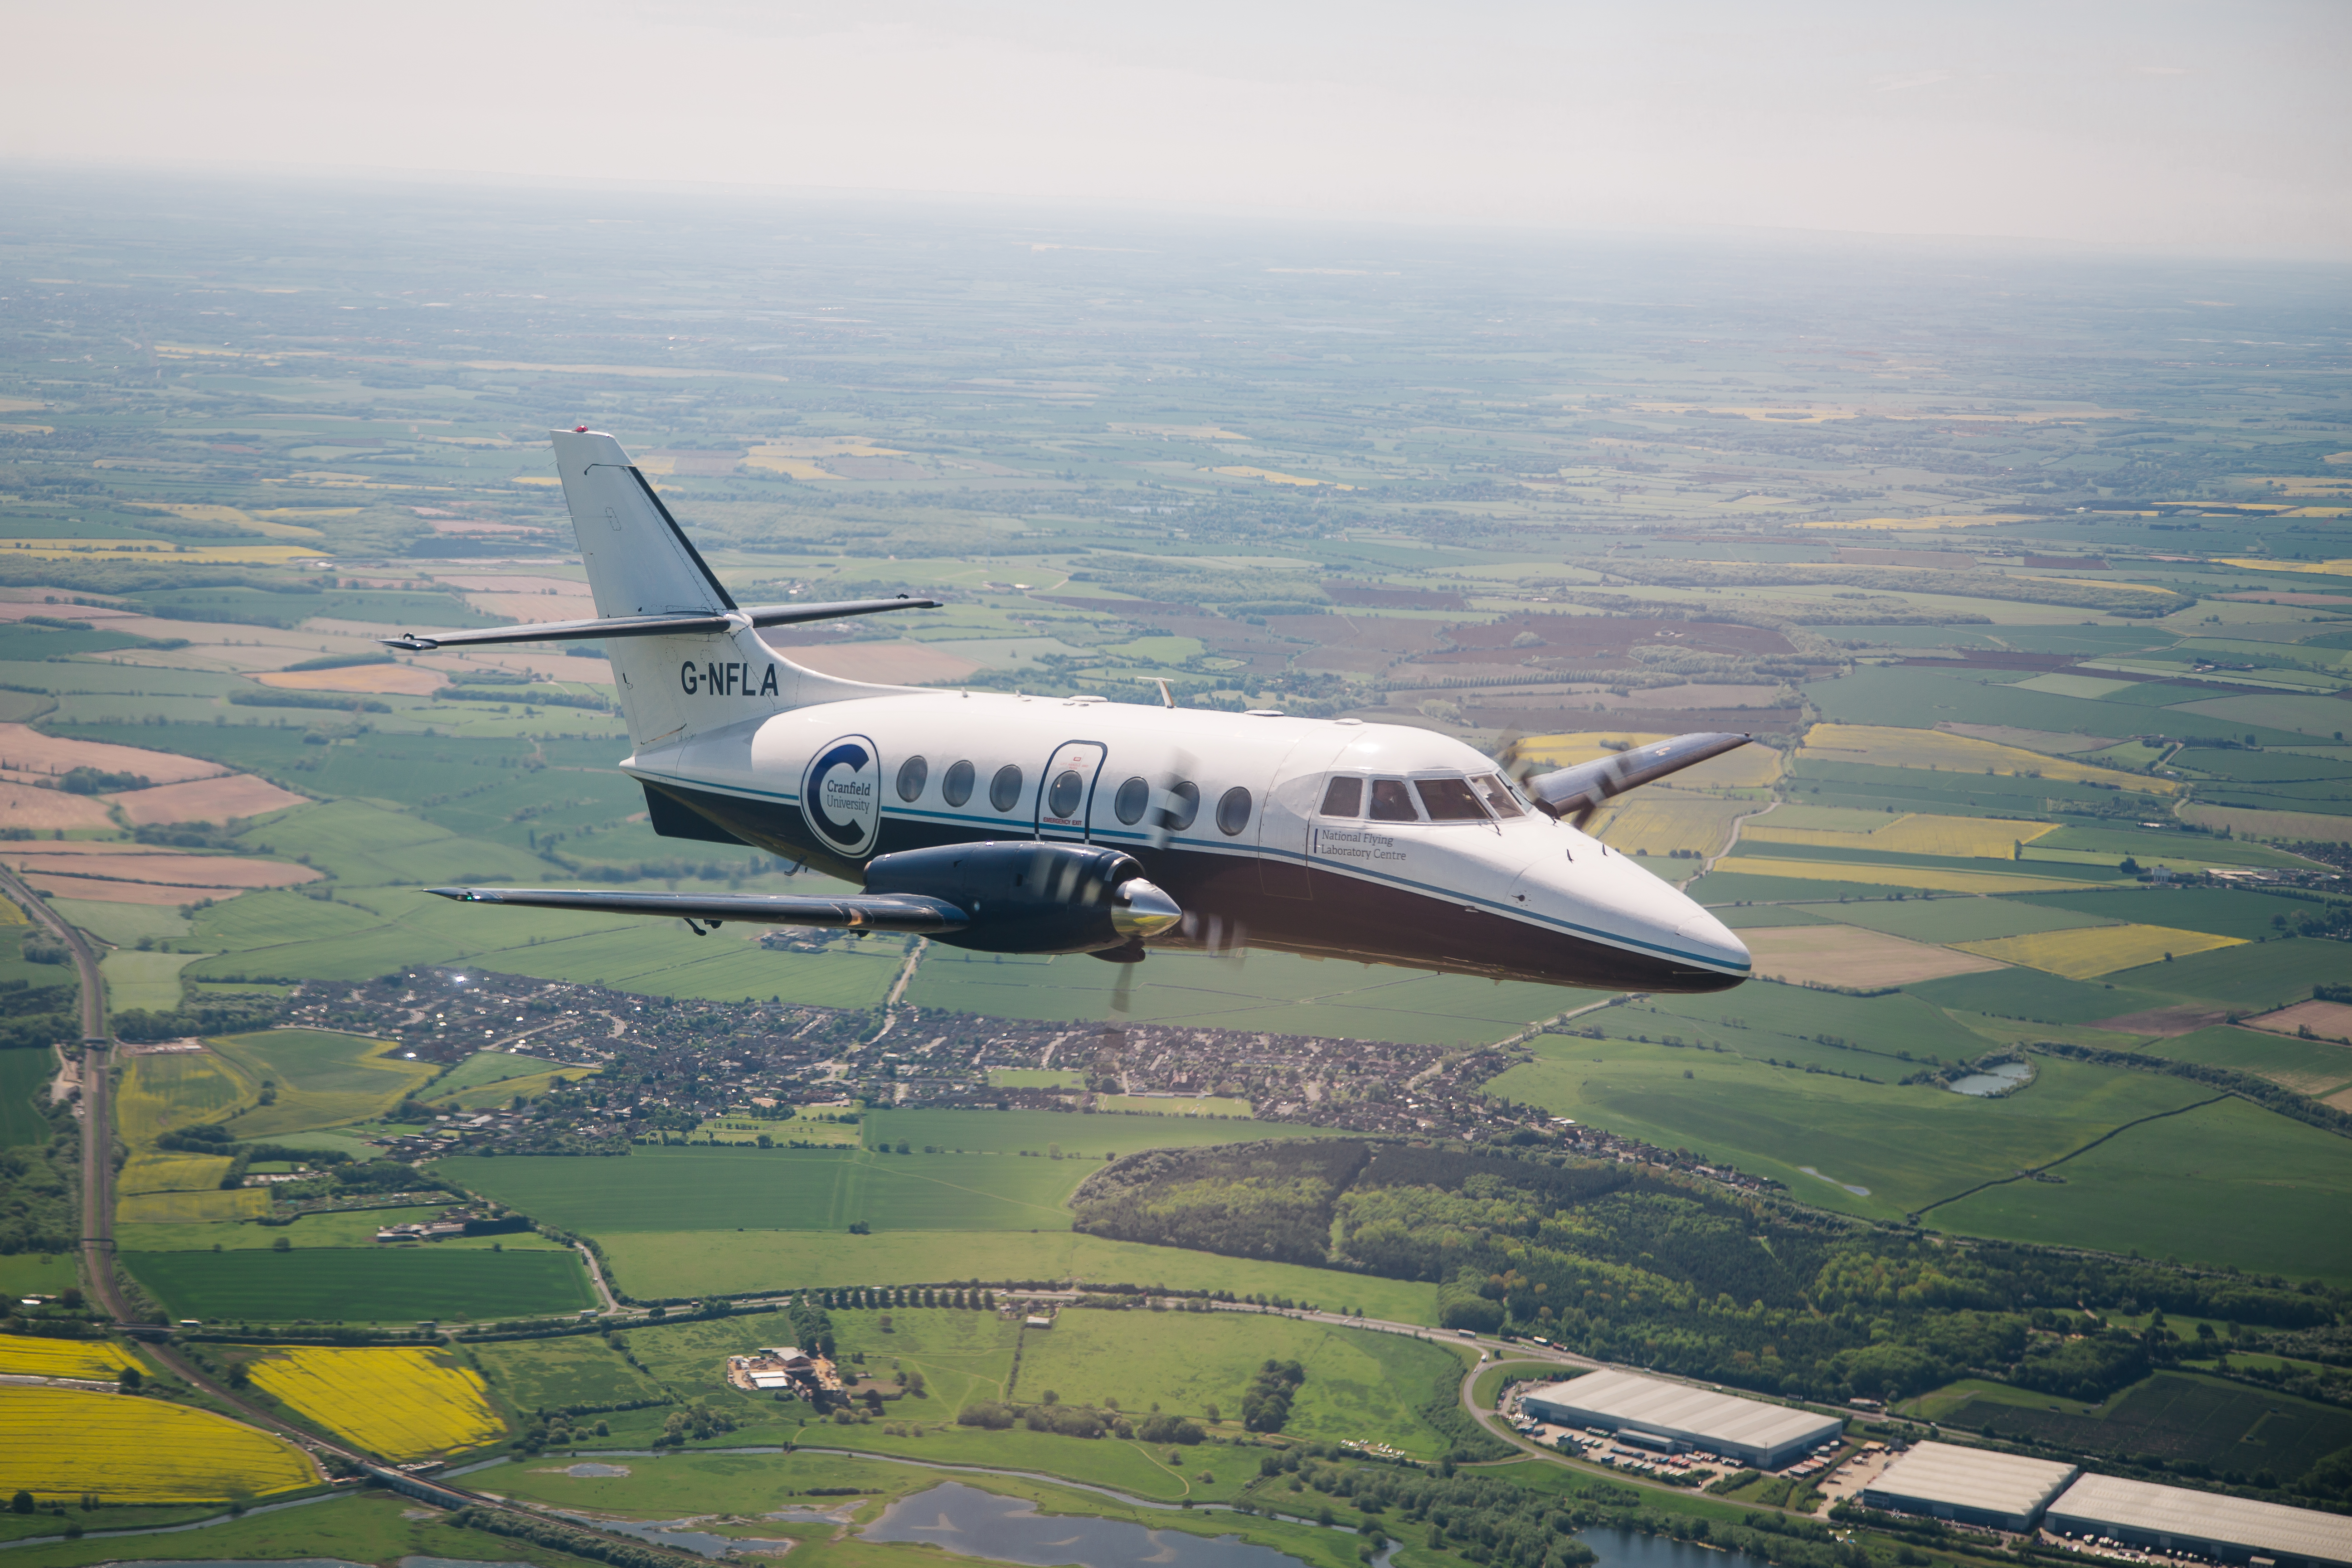 ‘Flying classroom’ lands University the highest UK honour